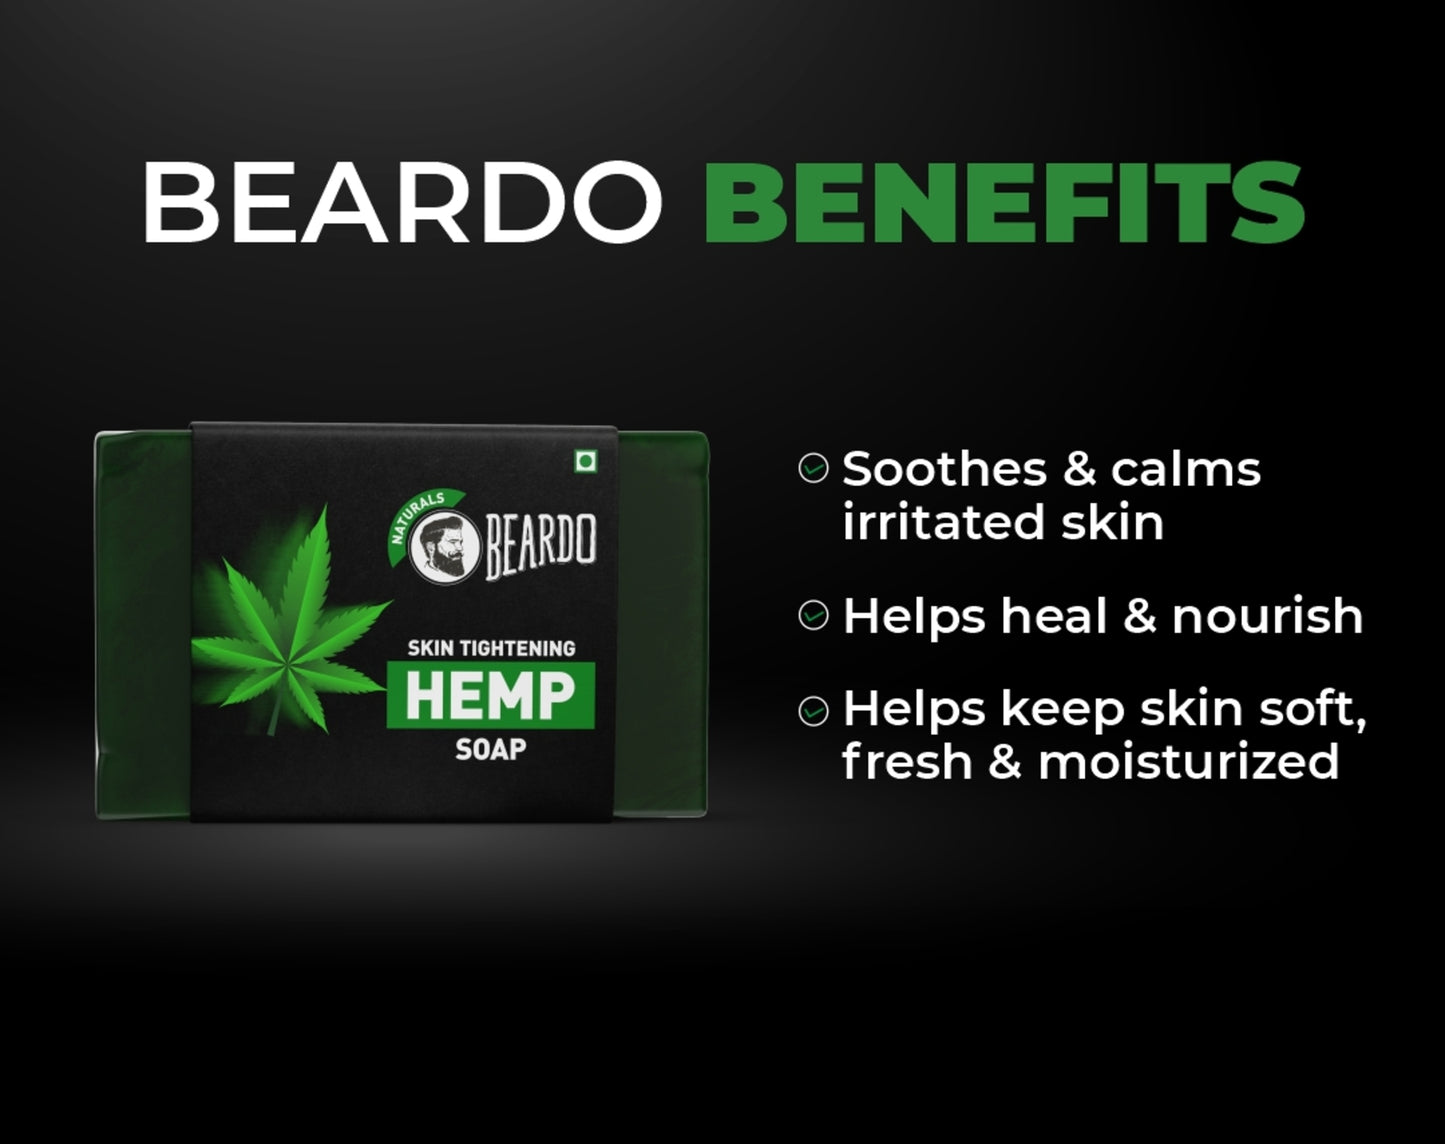 beardo benefits, nourisment, calms irritated skin, skin soft and fresh and moisturised